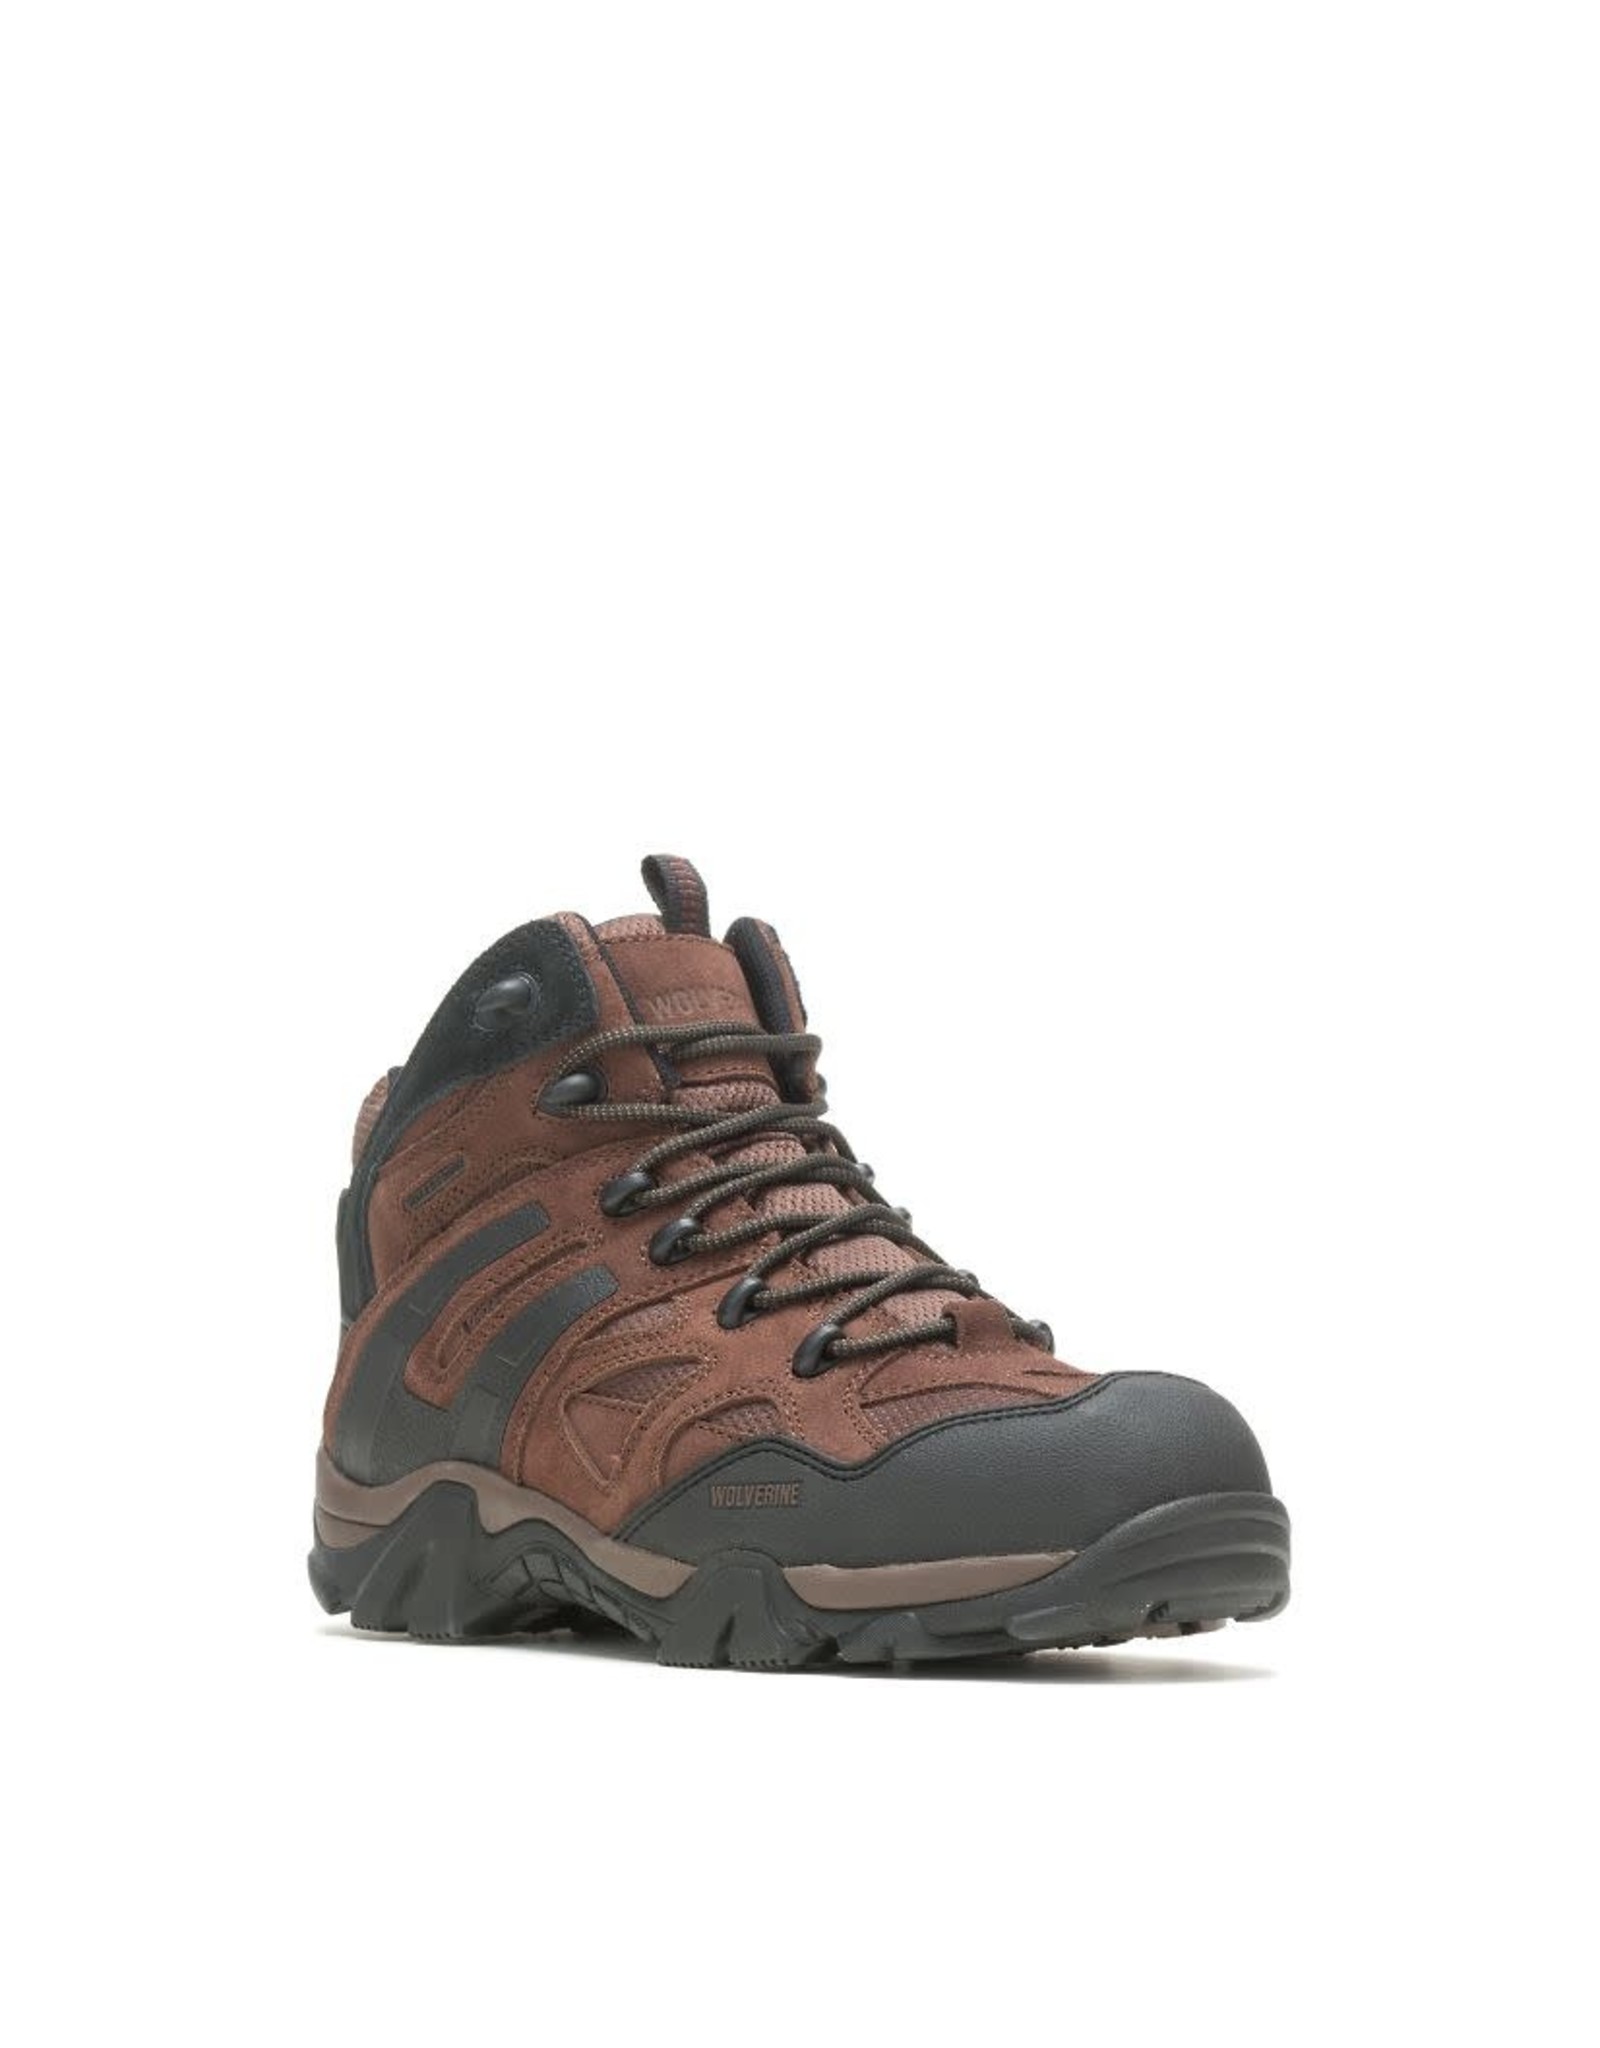 Wolverine Men's Wilderness Composite Toe W080031 Brown Work Boots